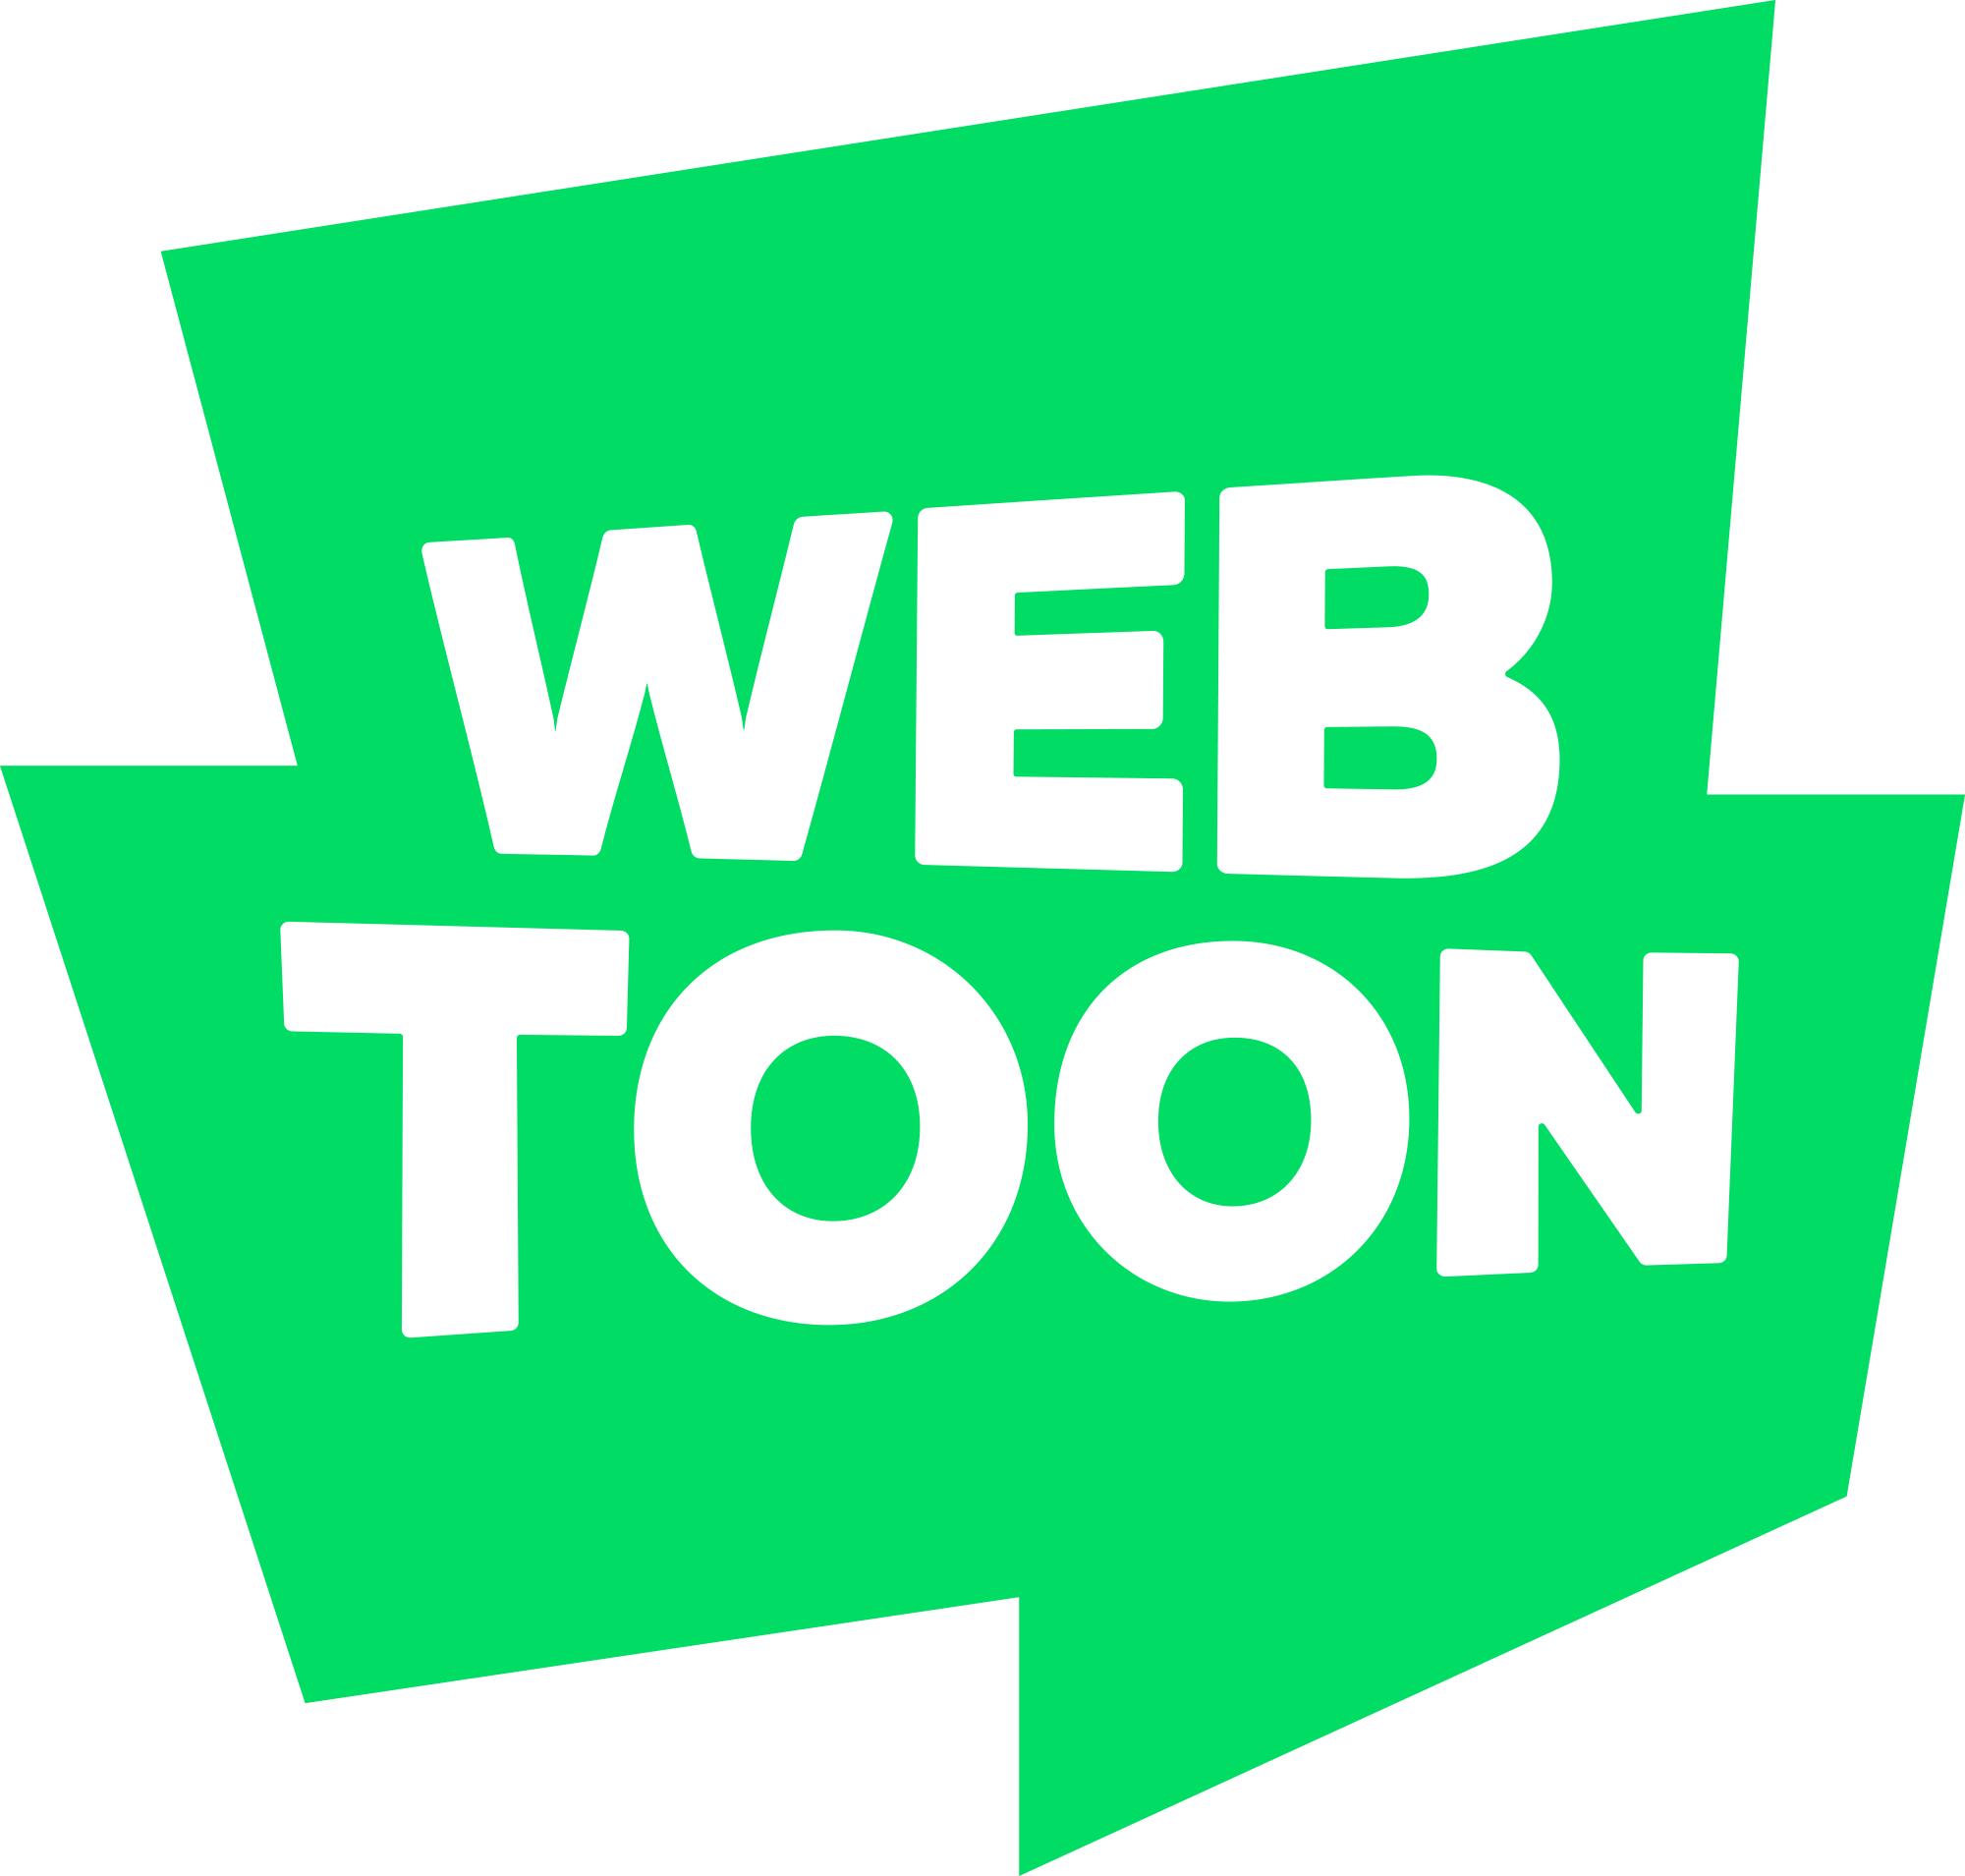 WEBTOON_Logo_Green (2).png